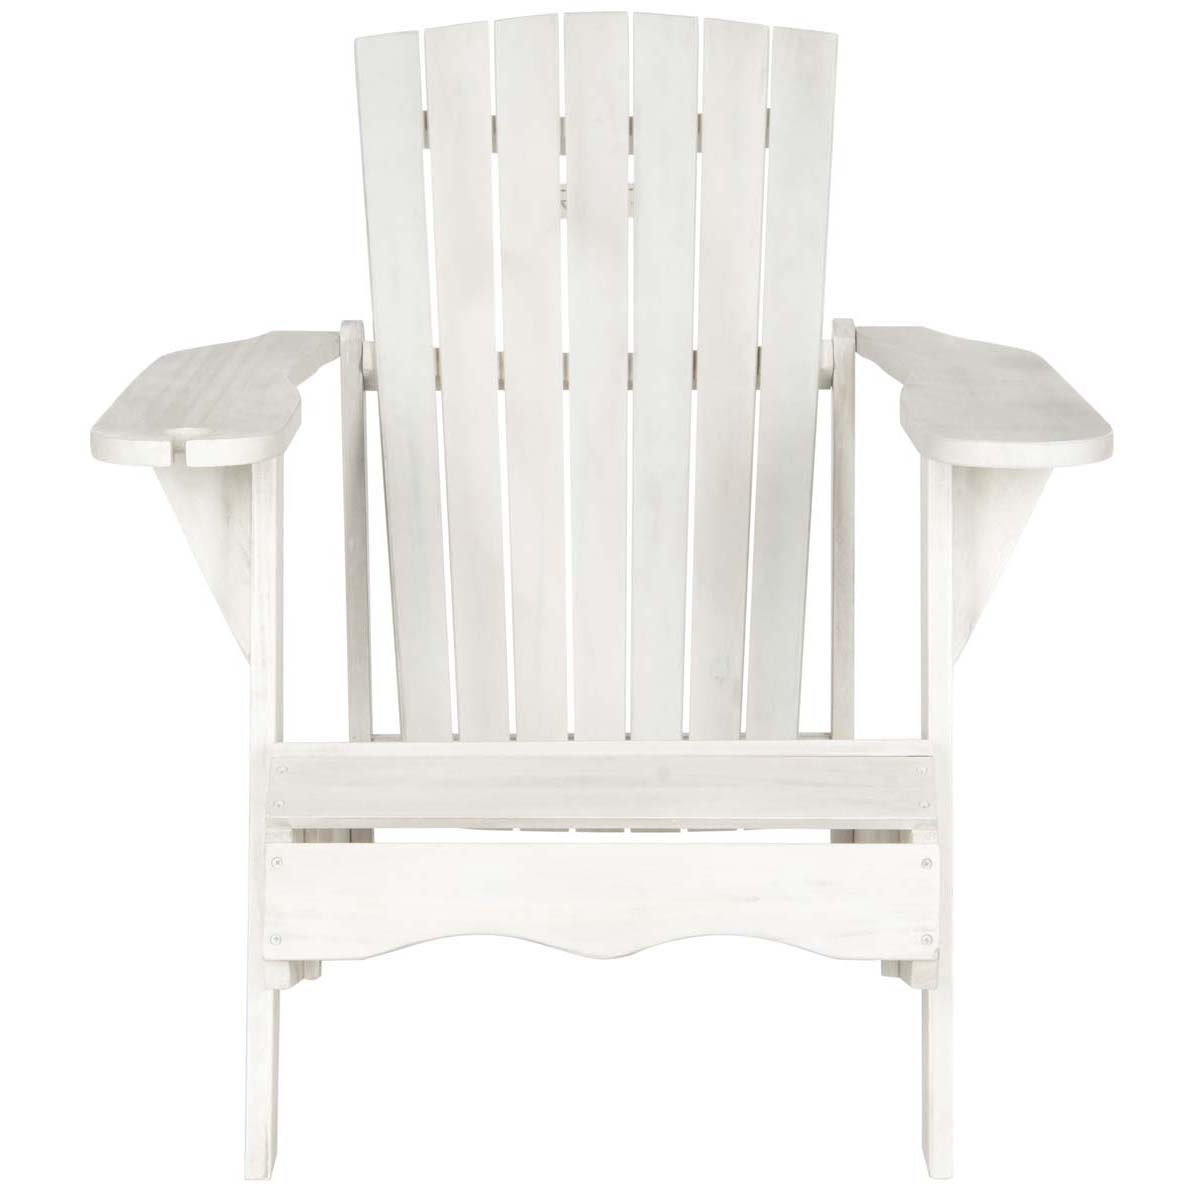 Safavieh Vista Wine Glass Holder Adirondack Chair , PAT6727 - Antique White